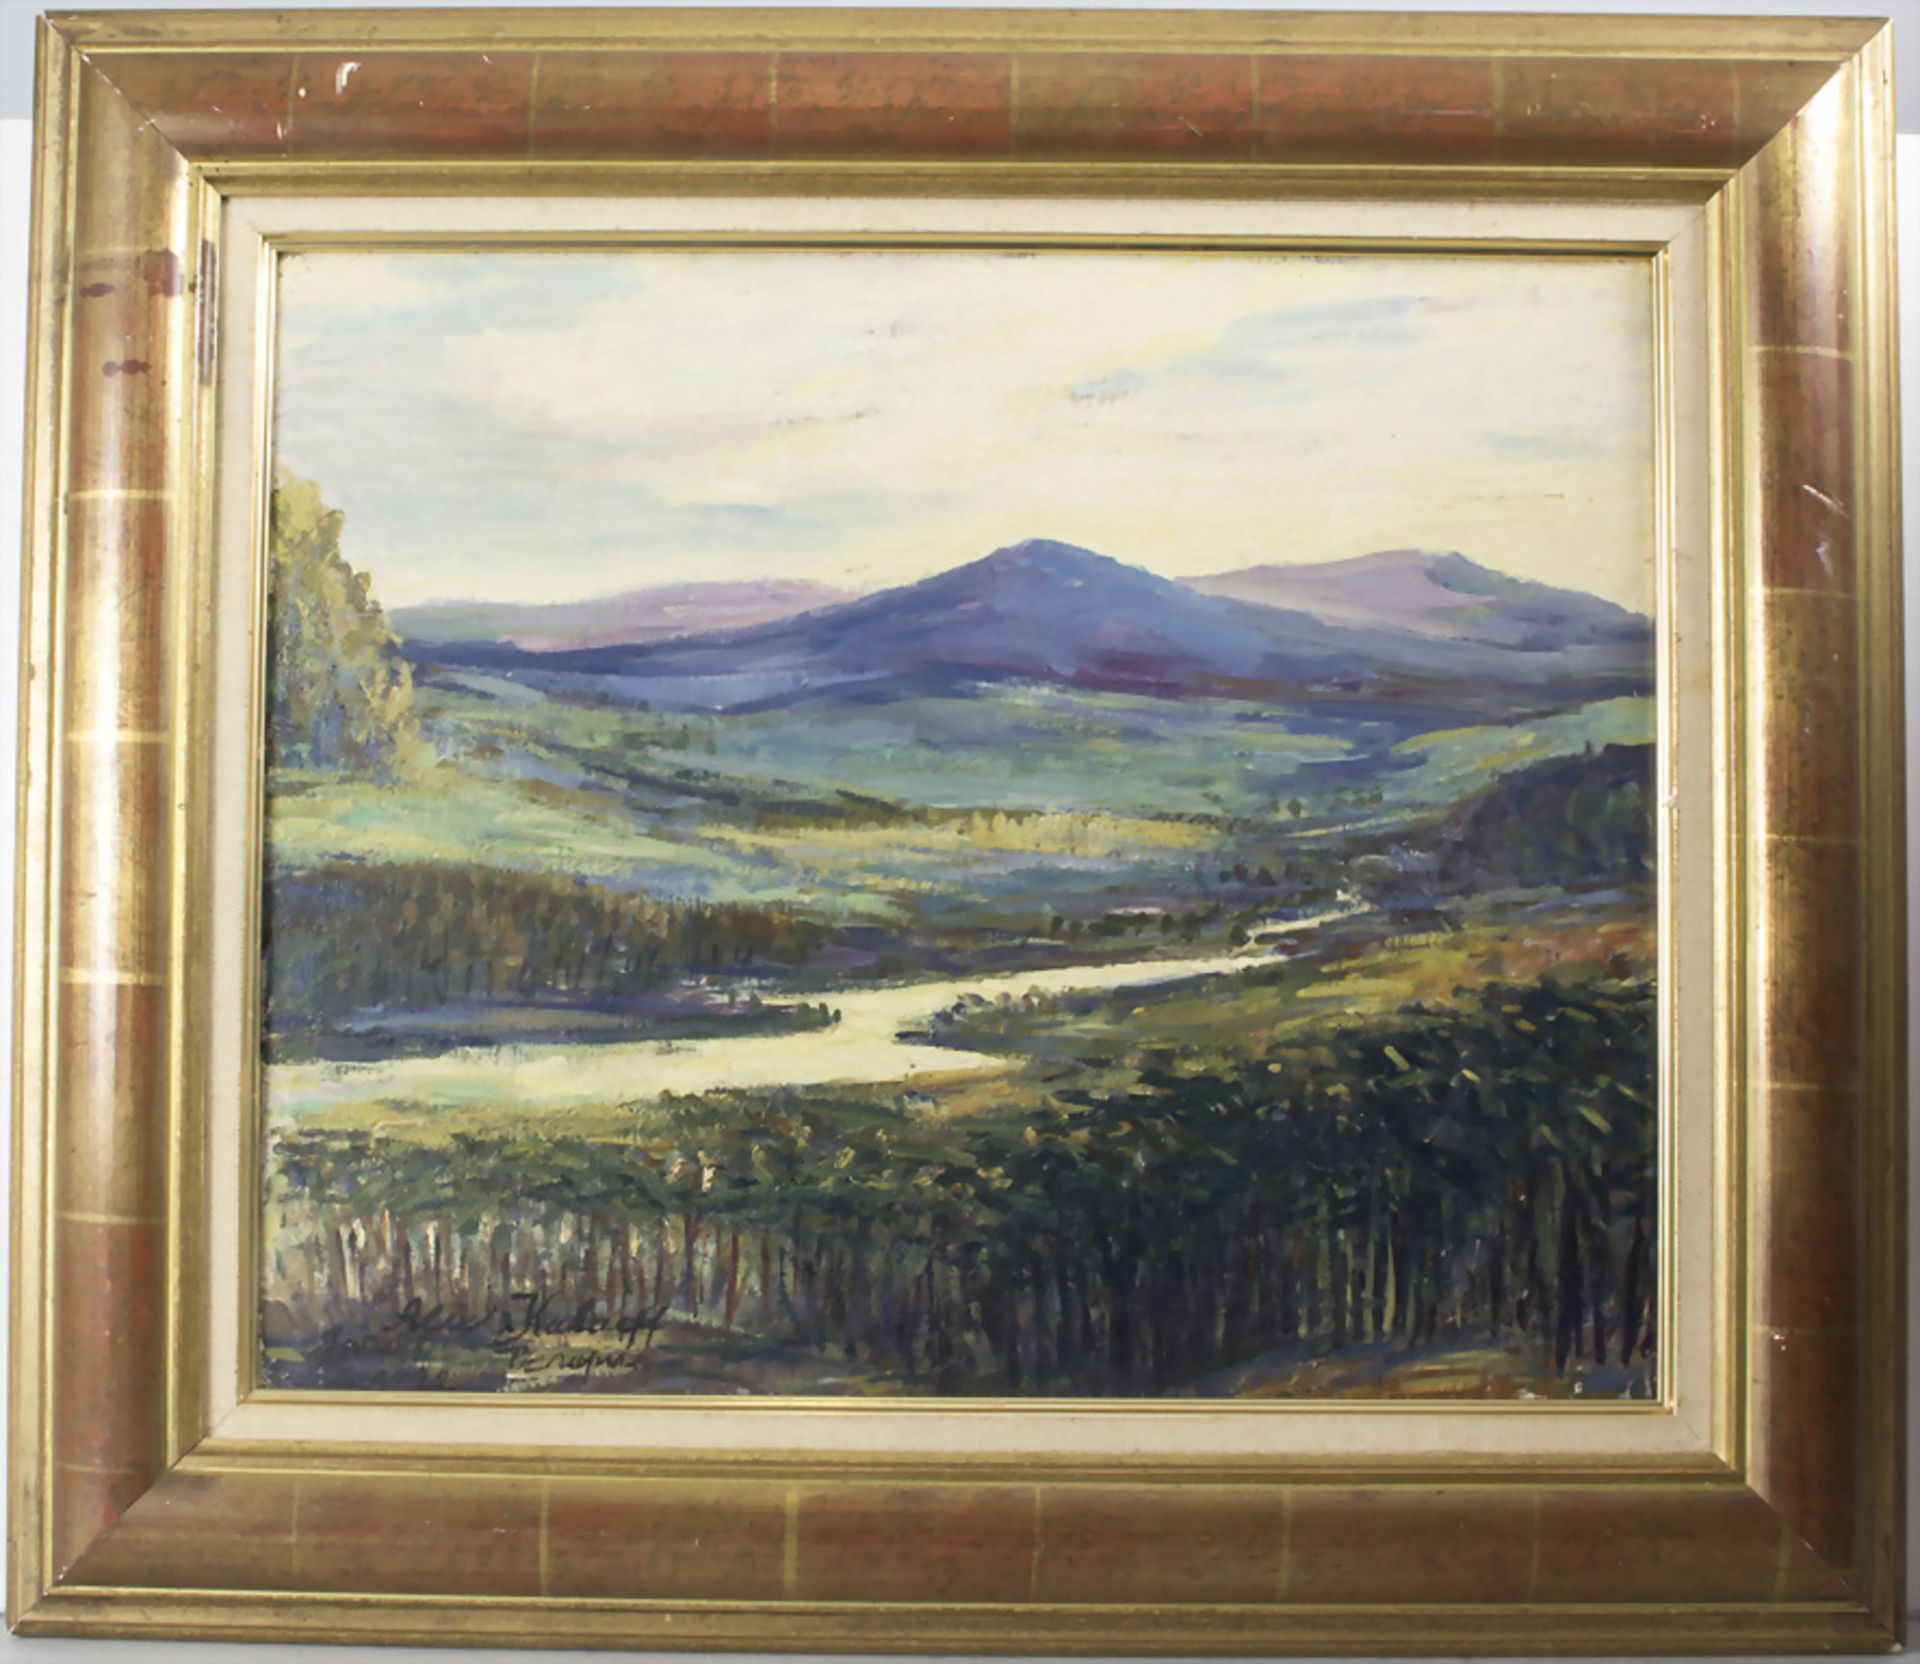 Alexis Kalaeff (1902-1978), 'Hügelige Landschaft am Fluss' / 'A hilly landscape at a river', 1924